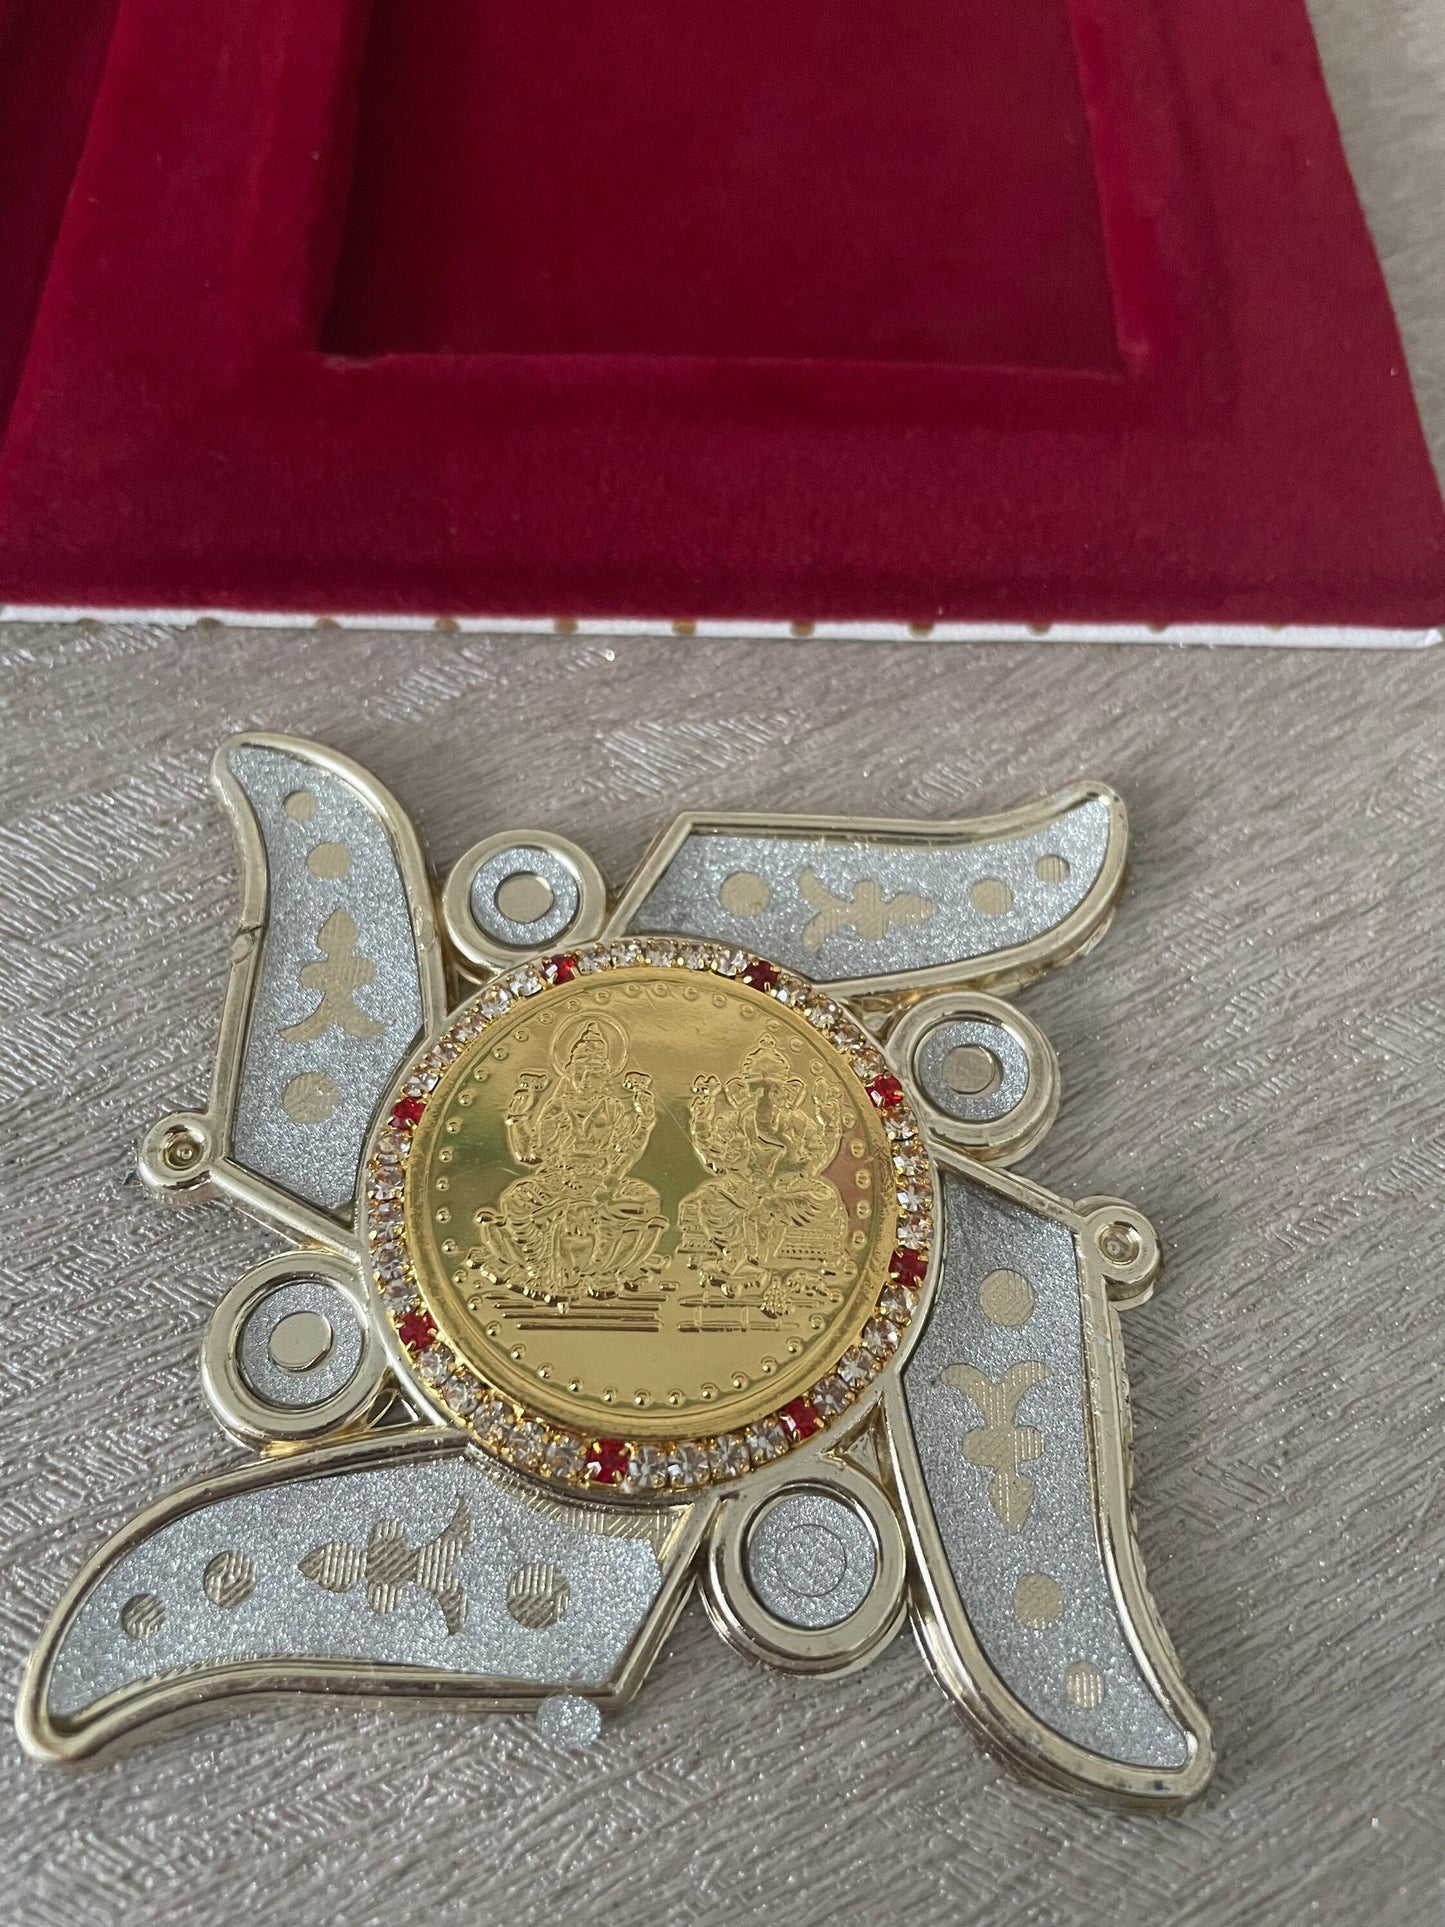 Religious Items| New Year Gifts| Lakshmi Ganesh Coin on Satya Symbol Gift Boxed | Hindu Swastika| New Home| House Warming